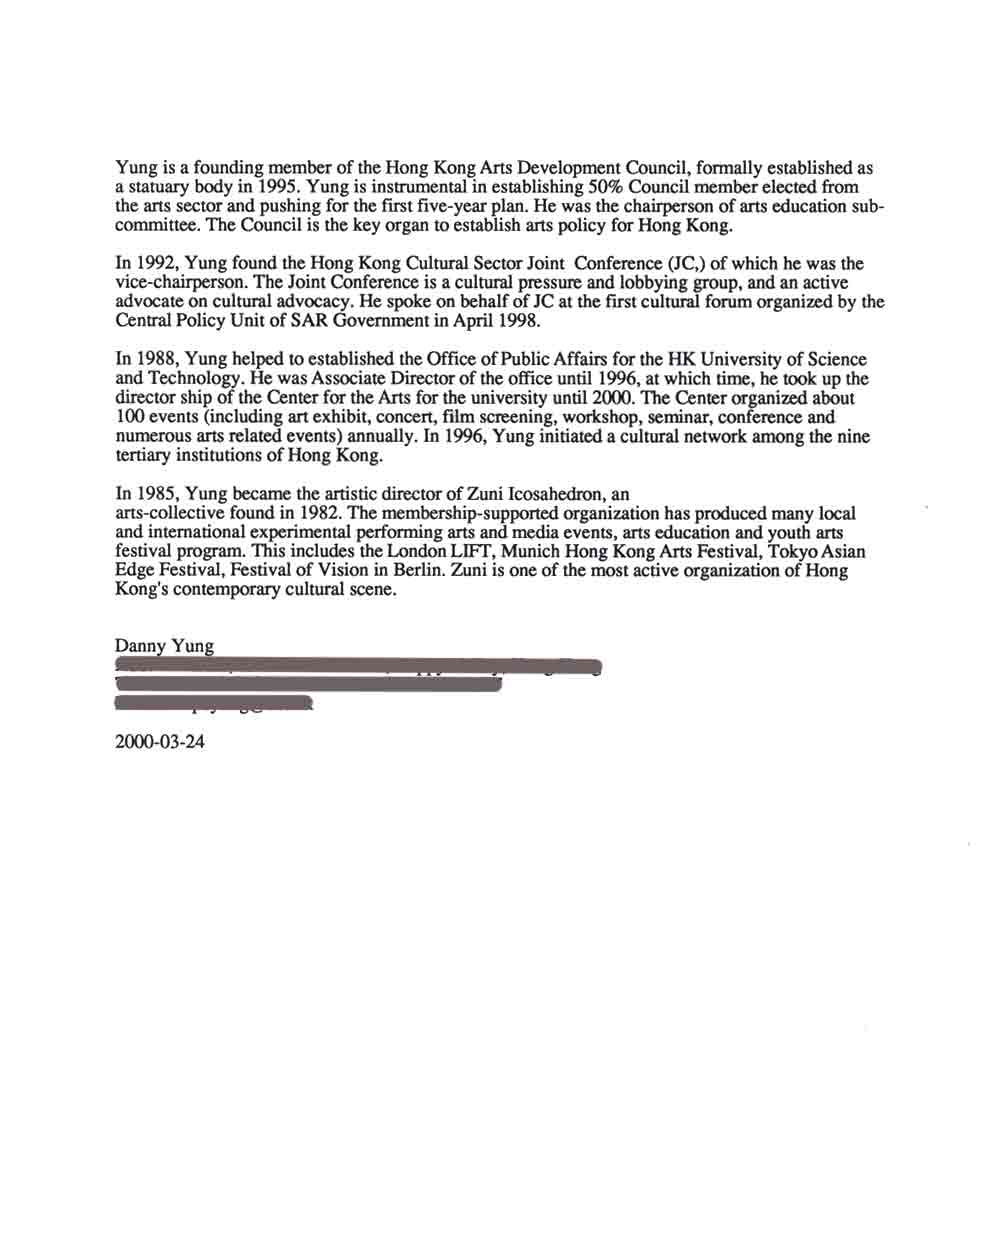 Danny Yung's Artist Biography, pg 2